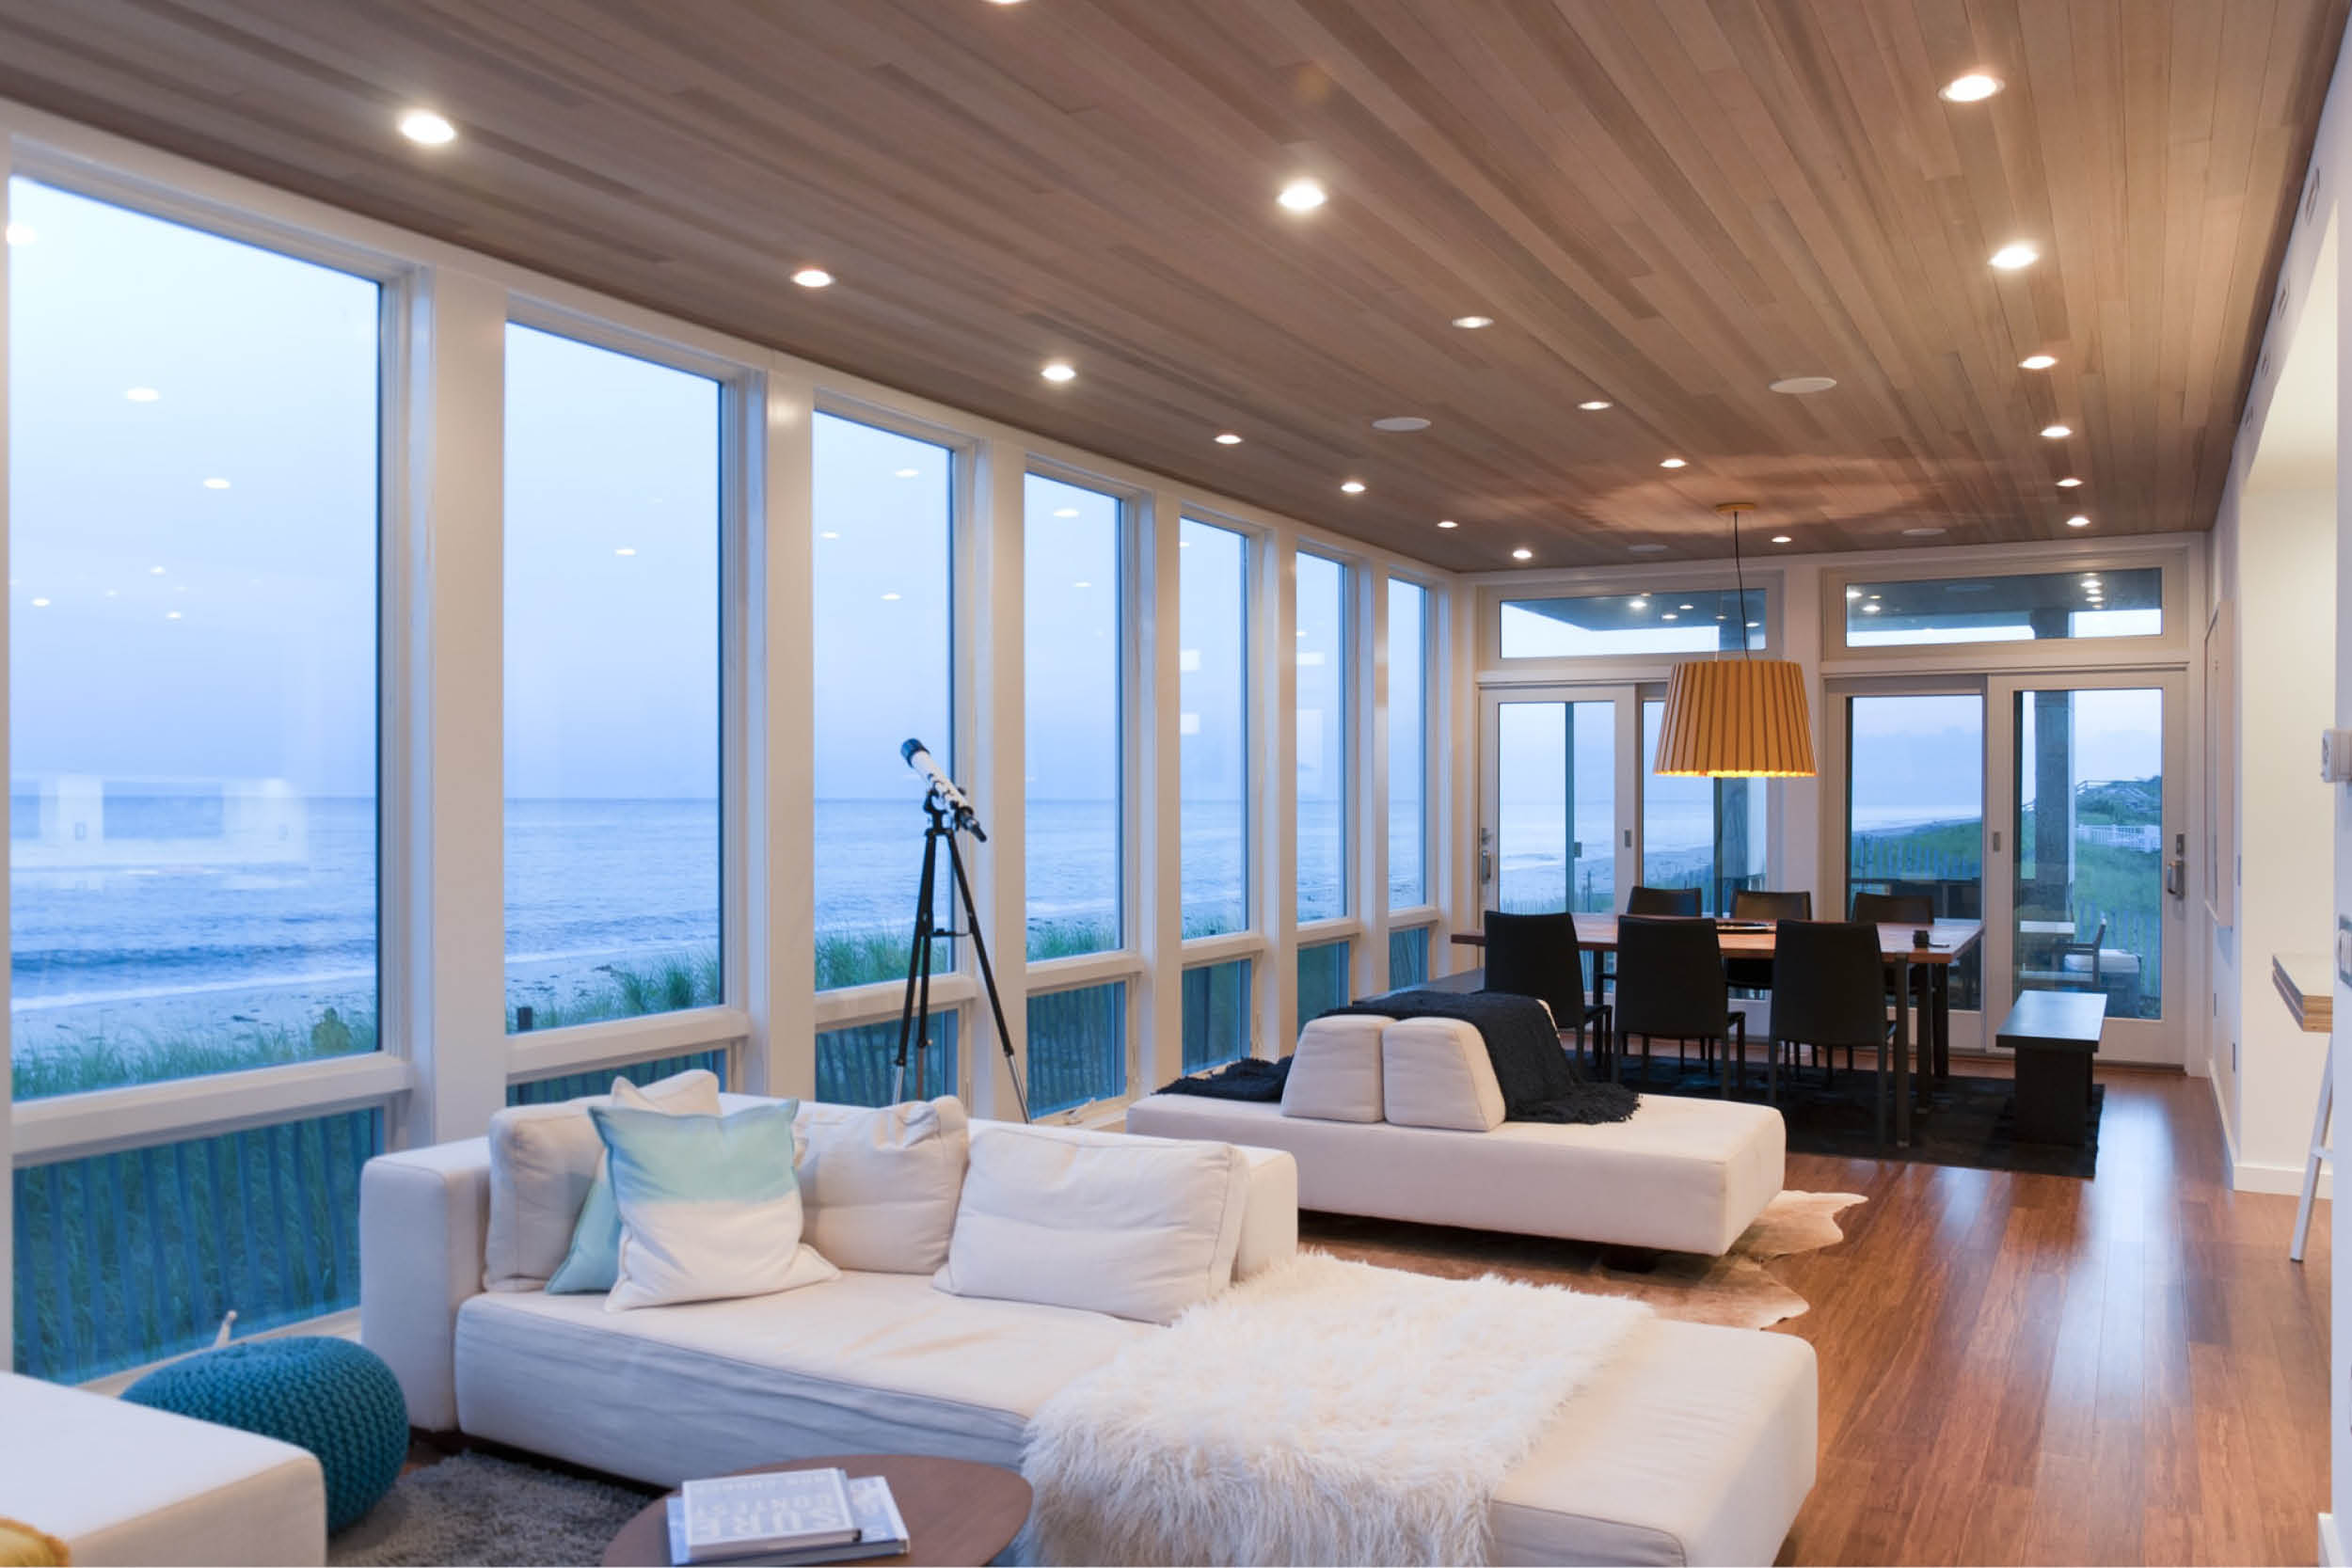 08-res4-resolution-4-architecture-modern-modular-home-prefab-dune-road-beach-house-interior-living-room.jpg